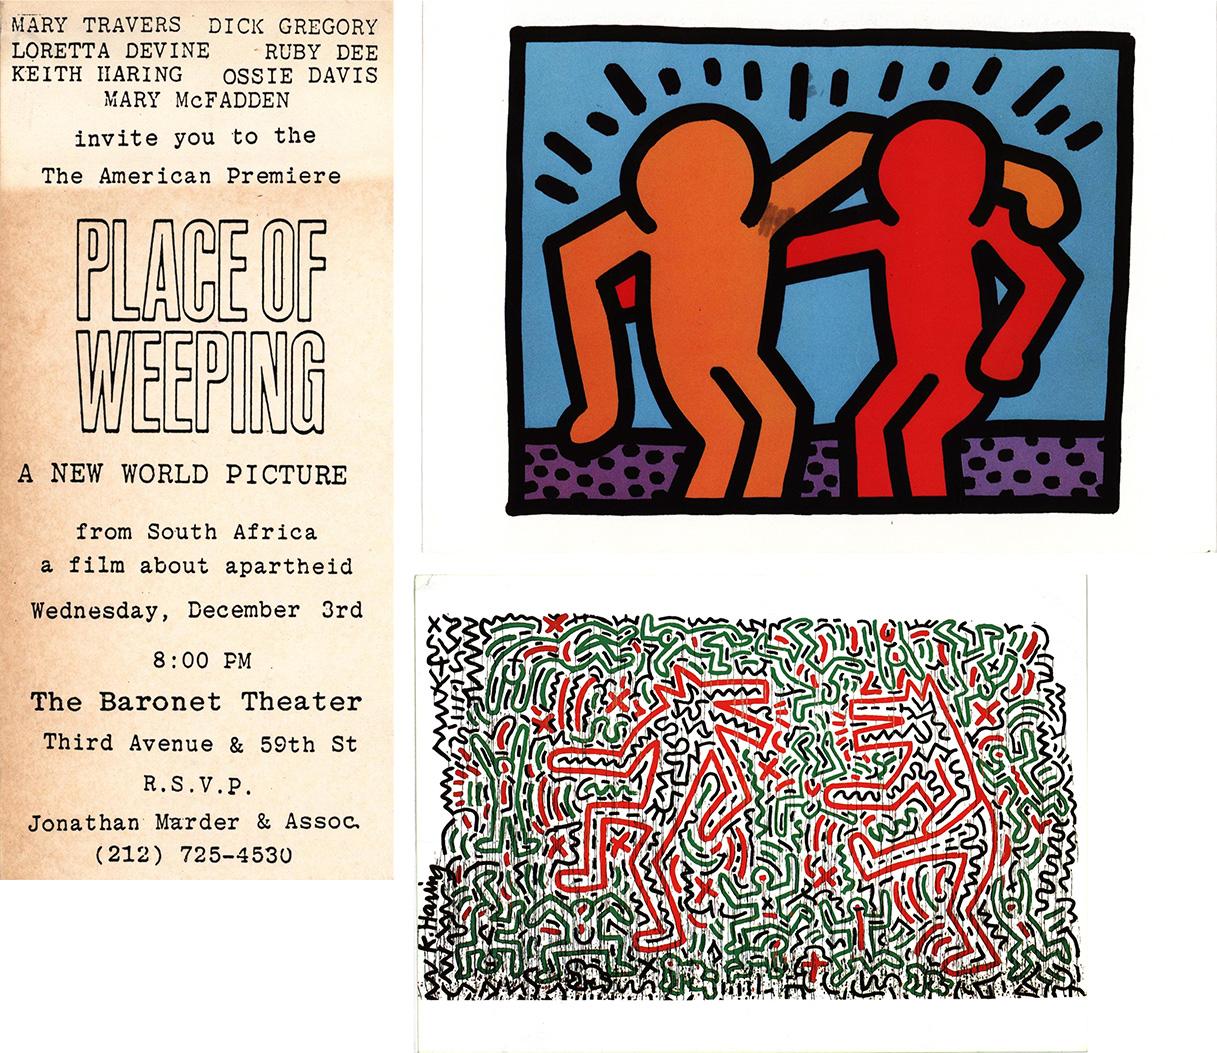 Collection éphémère Keith Haring des années 1980/1990 (store pop Keith Haring) en vente 1